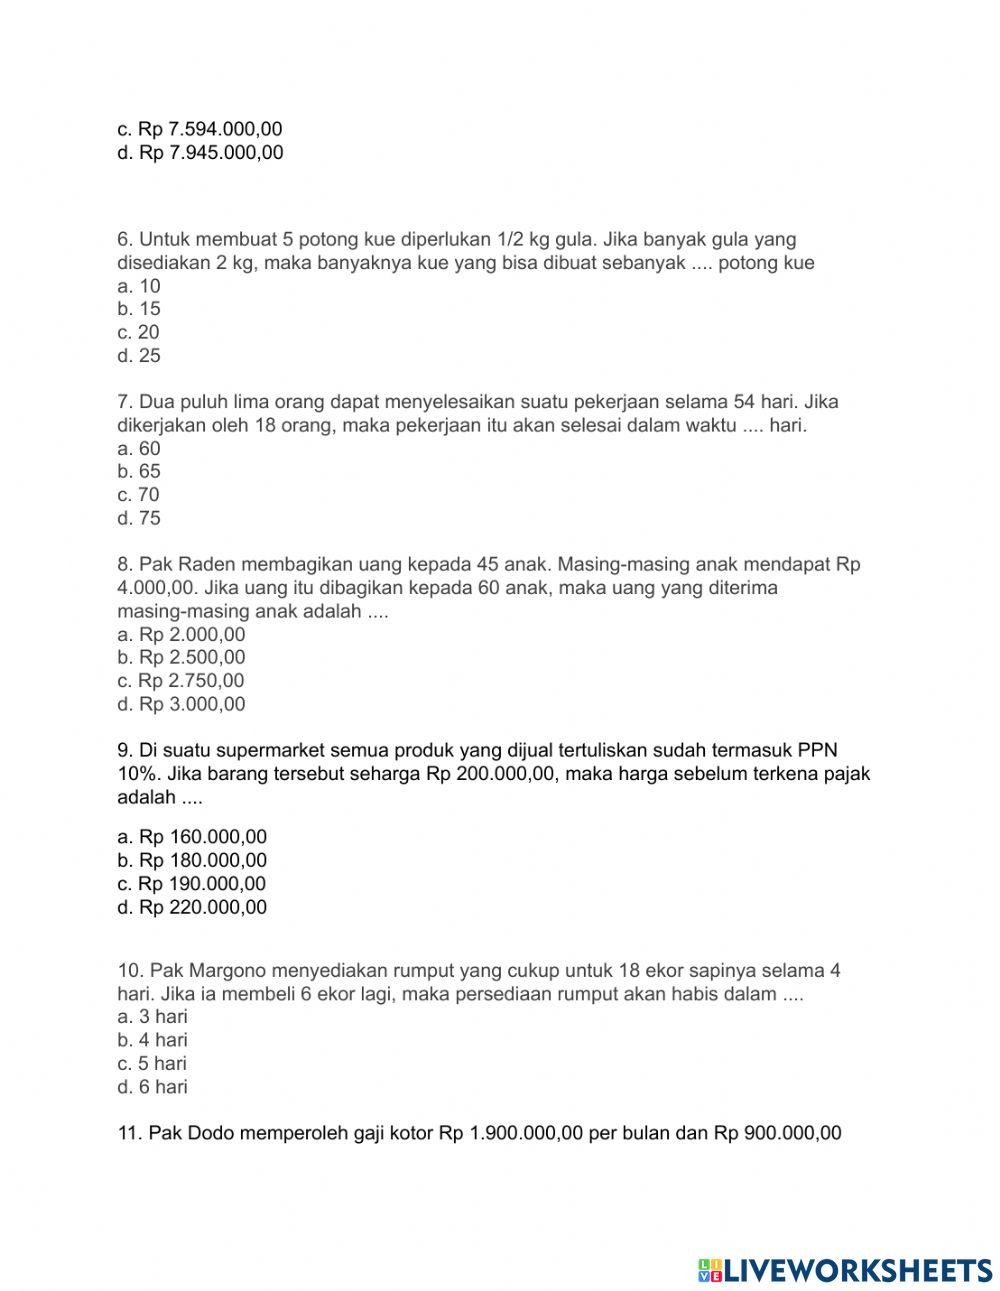 Soal uh matematika kls 7 worksheet | Live Worksheets